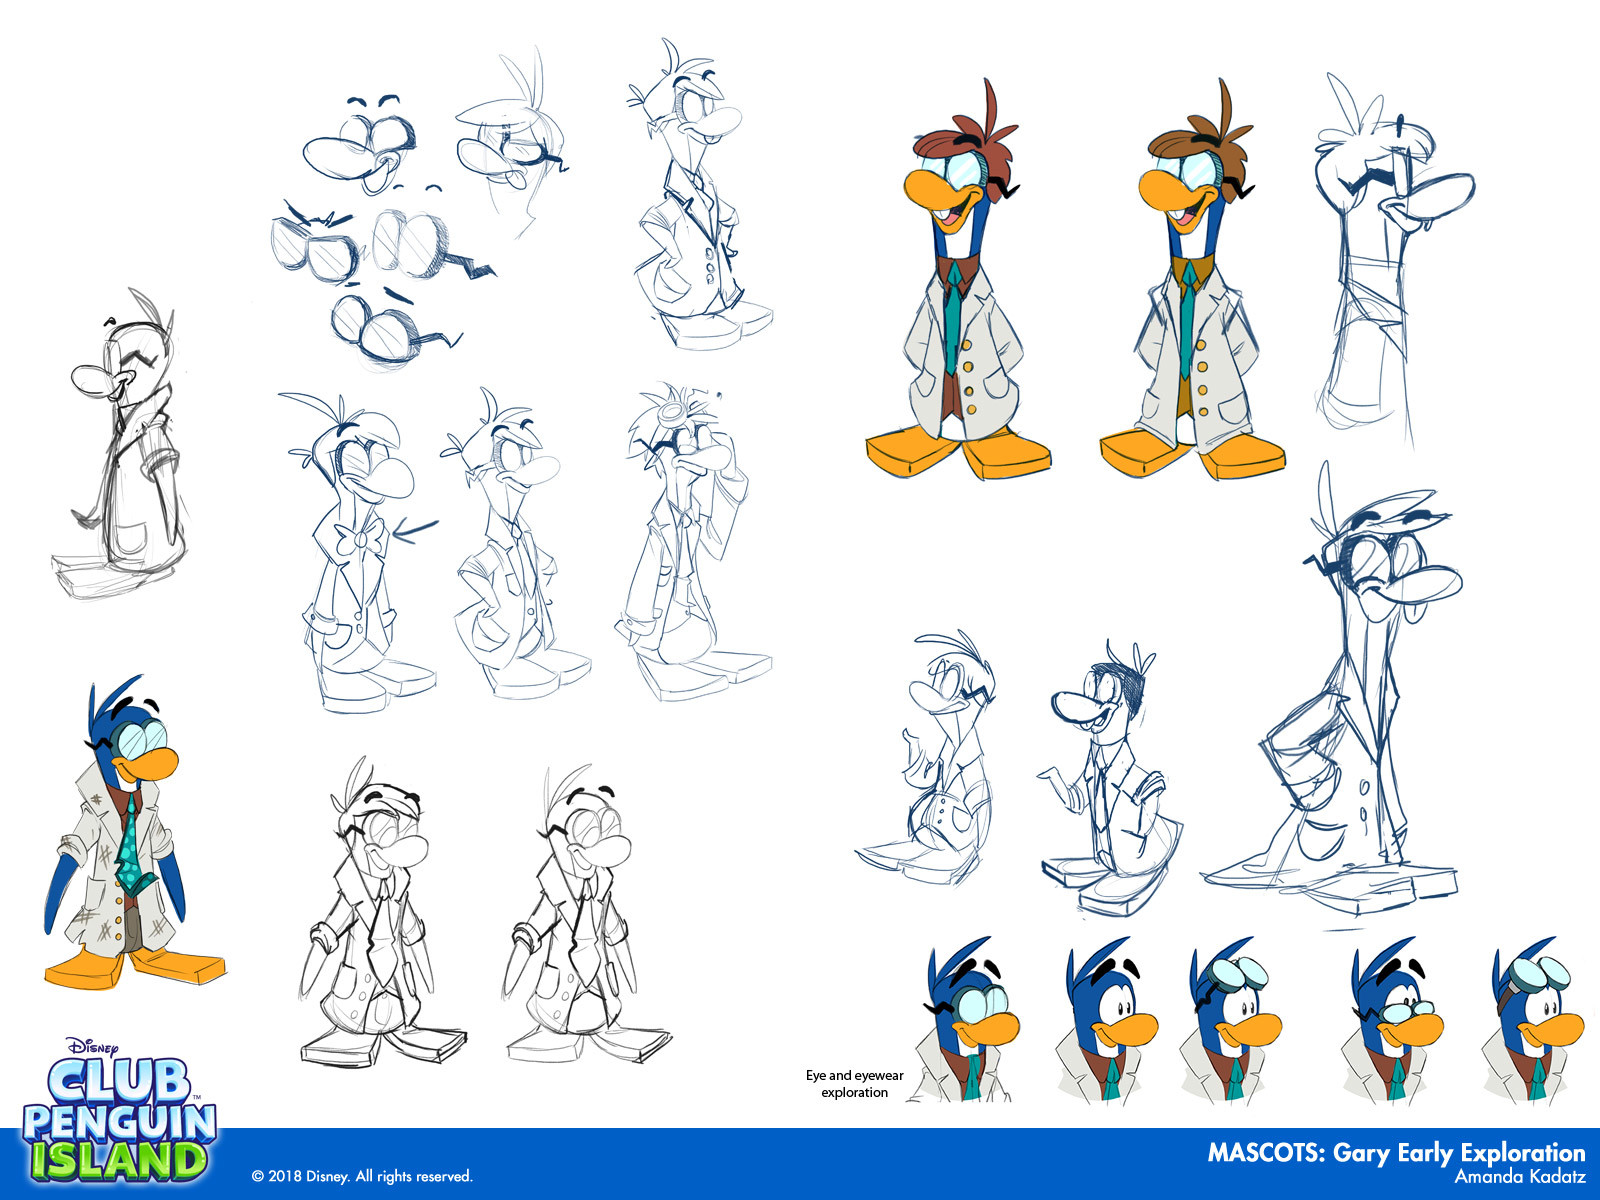 ArtStation - Club Penguin Island: Character Design